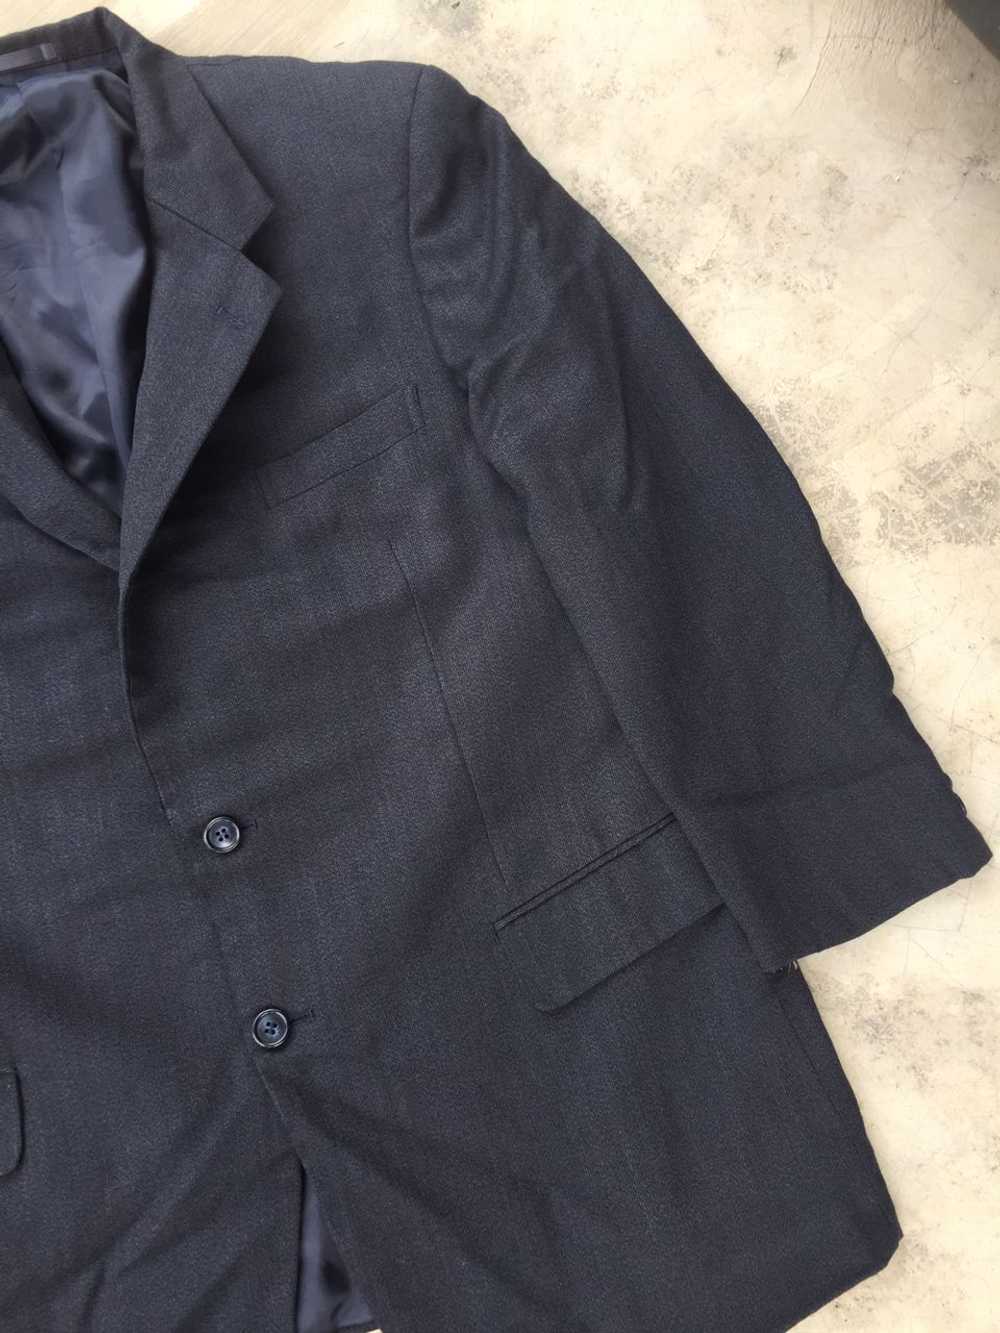 Tailor Made - Valentino Nervini Blazer Suit - image 3